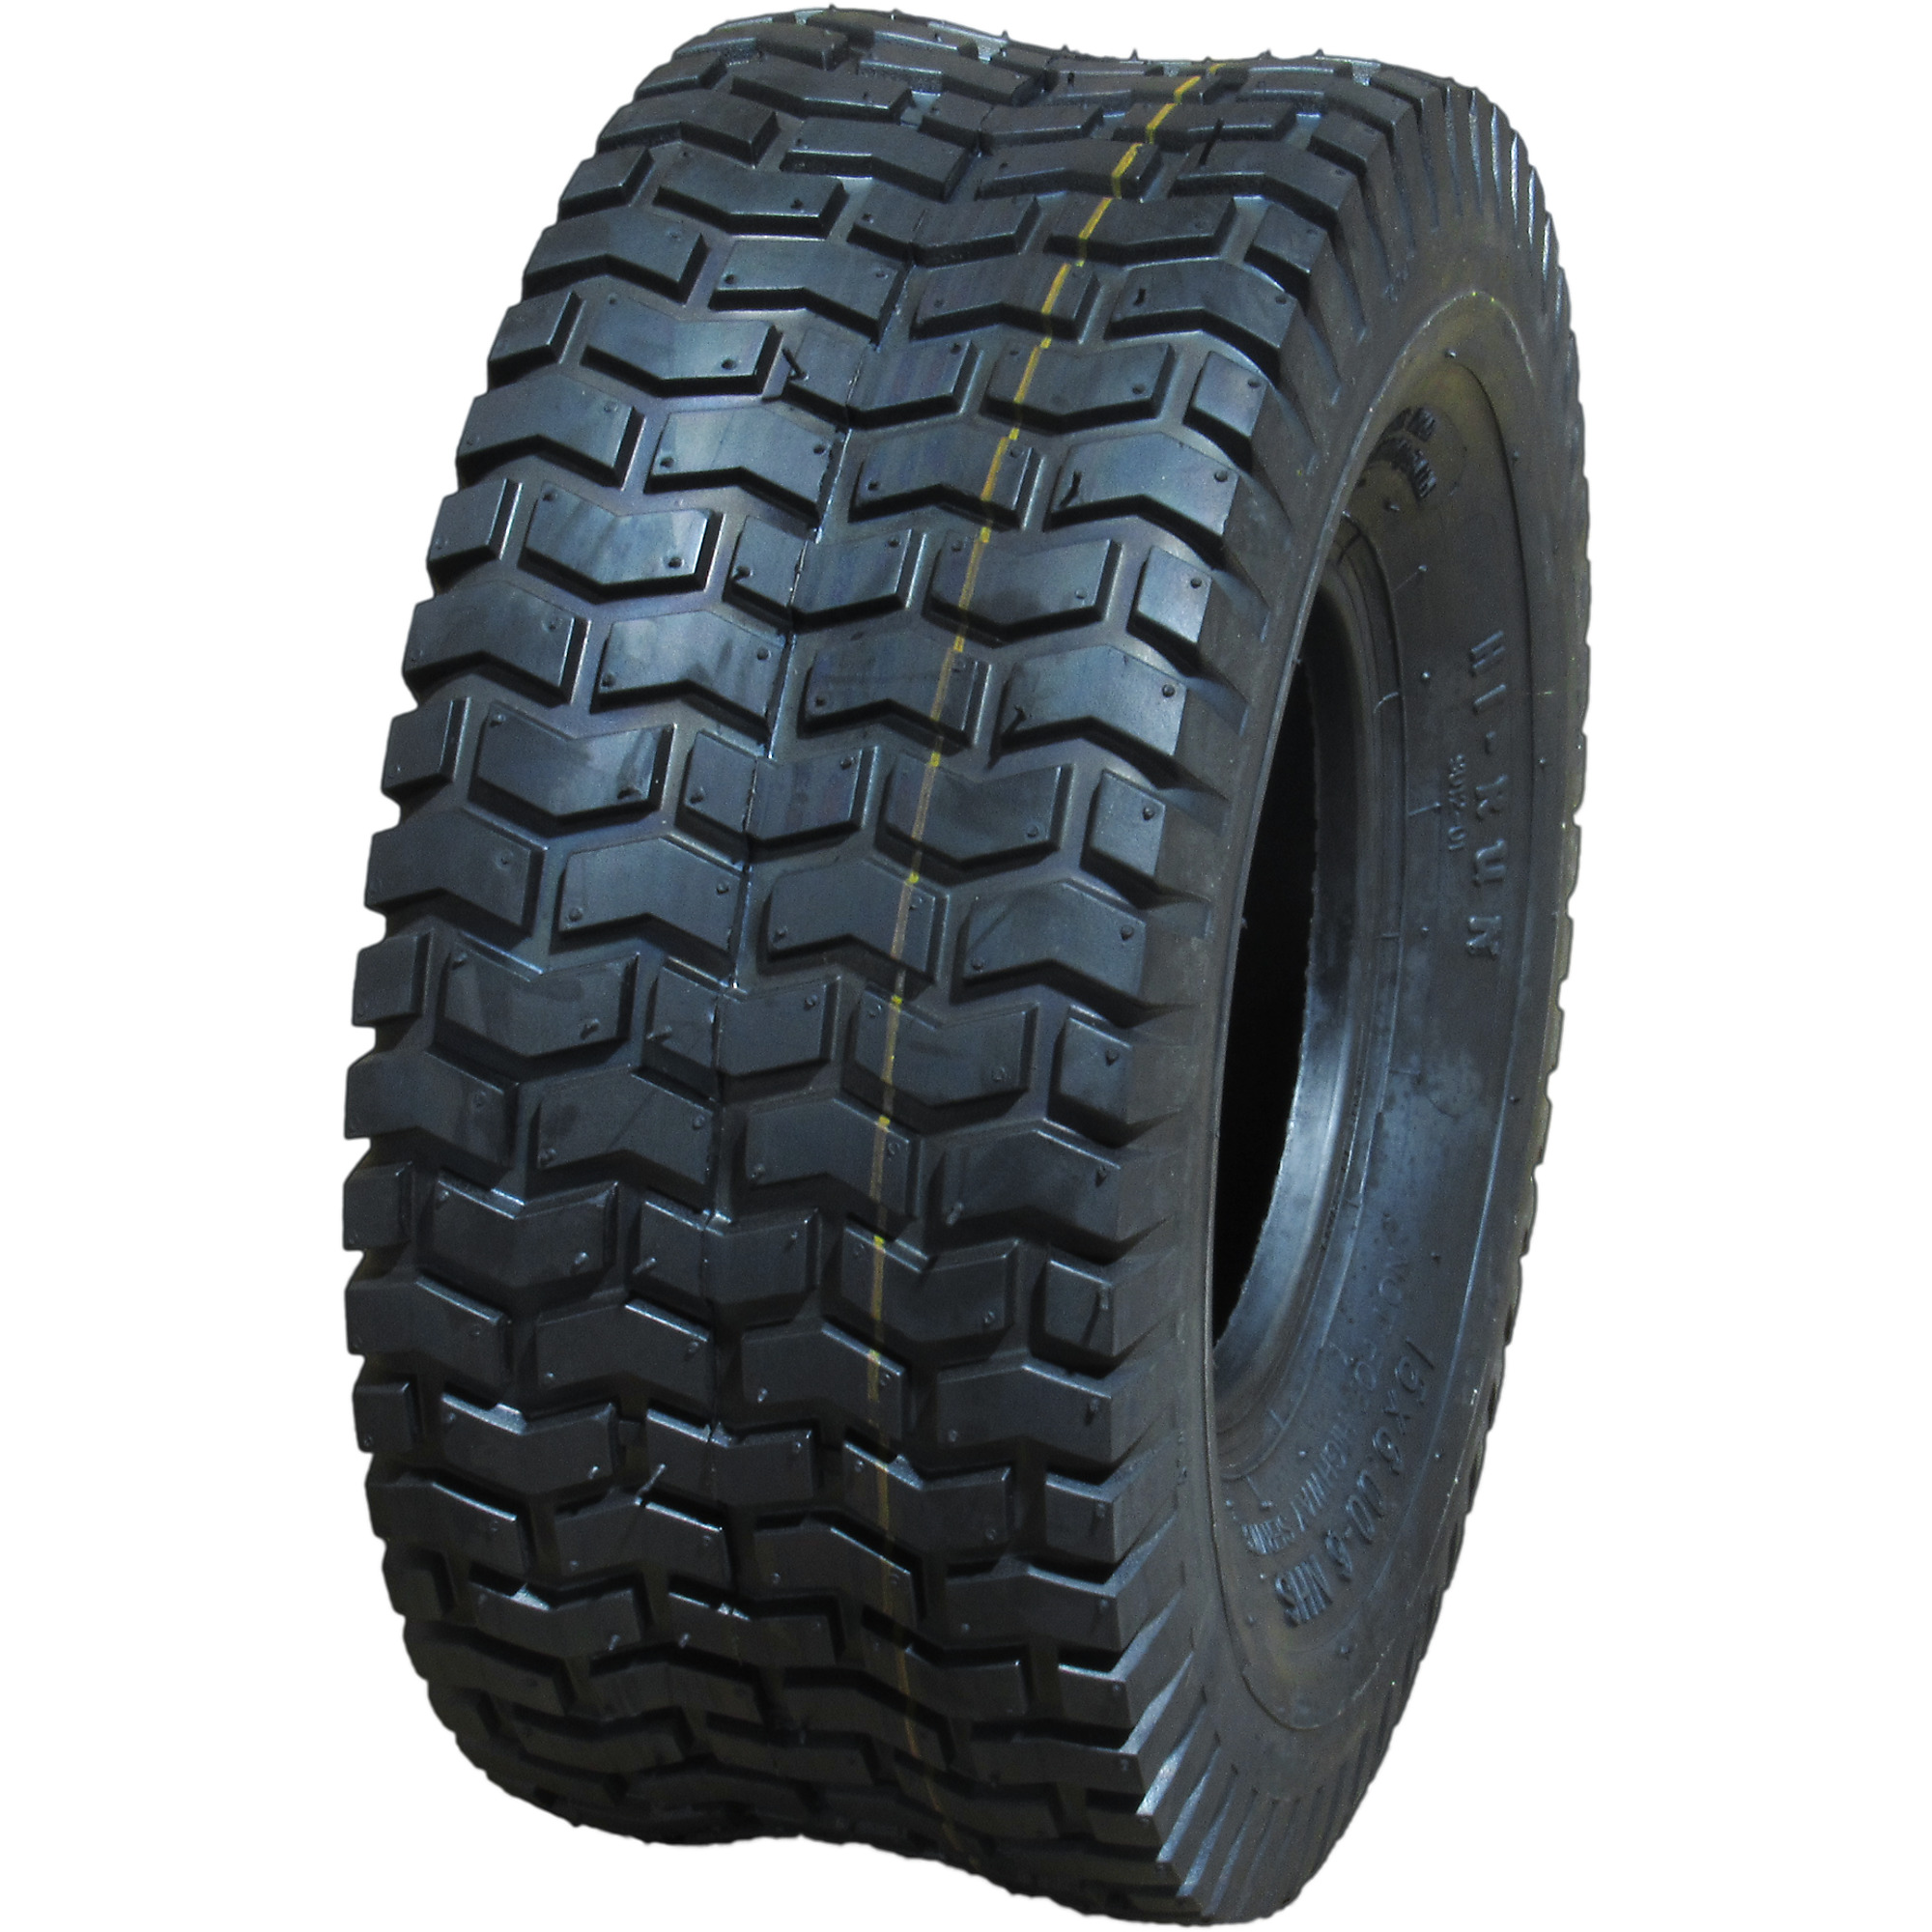 HI-RUN, Lawn Garden Tire, SU12 Turf II, Tire Size 15X6.00-6 Load Range Rating B, Model WD1187